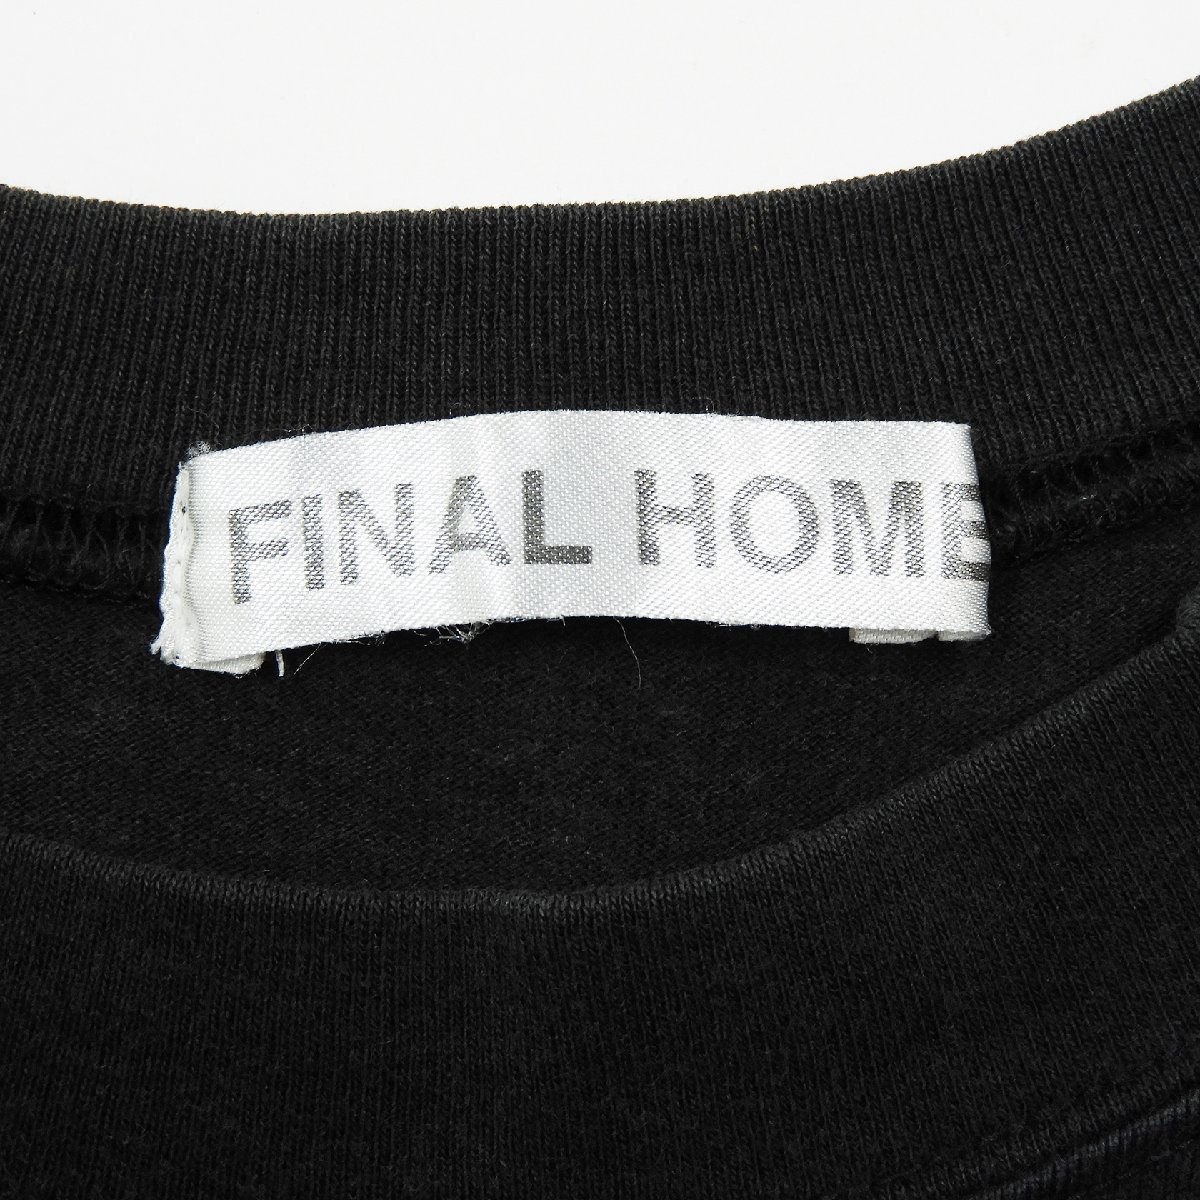 FINAL HOME ファイナルホーム ロゴ Tシャツ Size 3 #16247 送料360円 カジュアル Tee_画像3